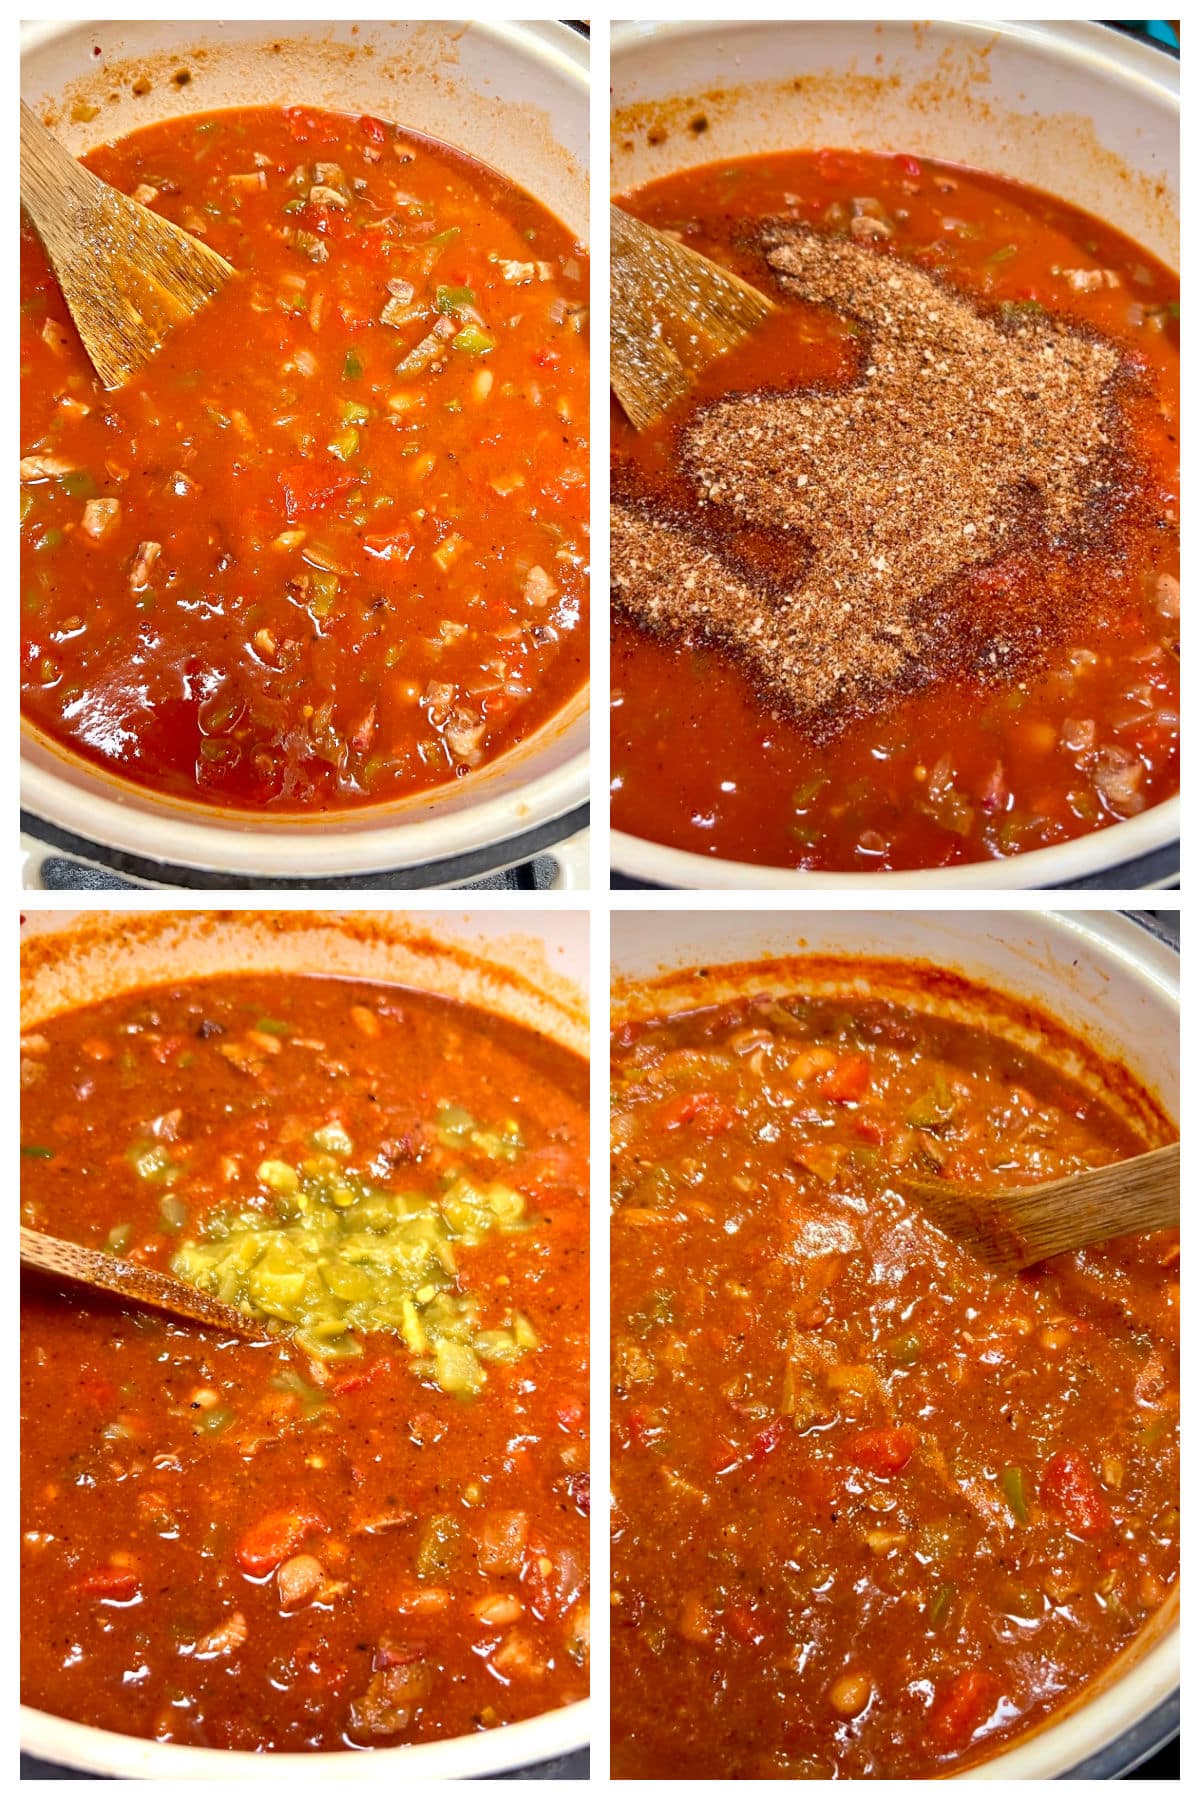 Collage making chili, adding seasonings, green chiles.